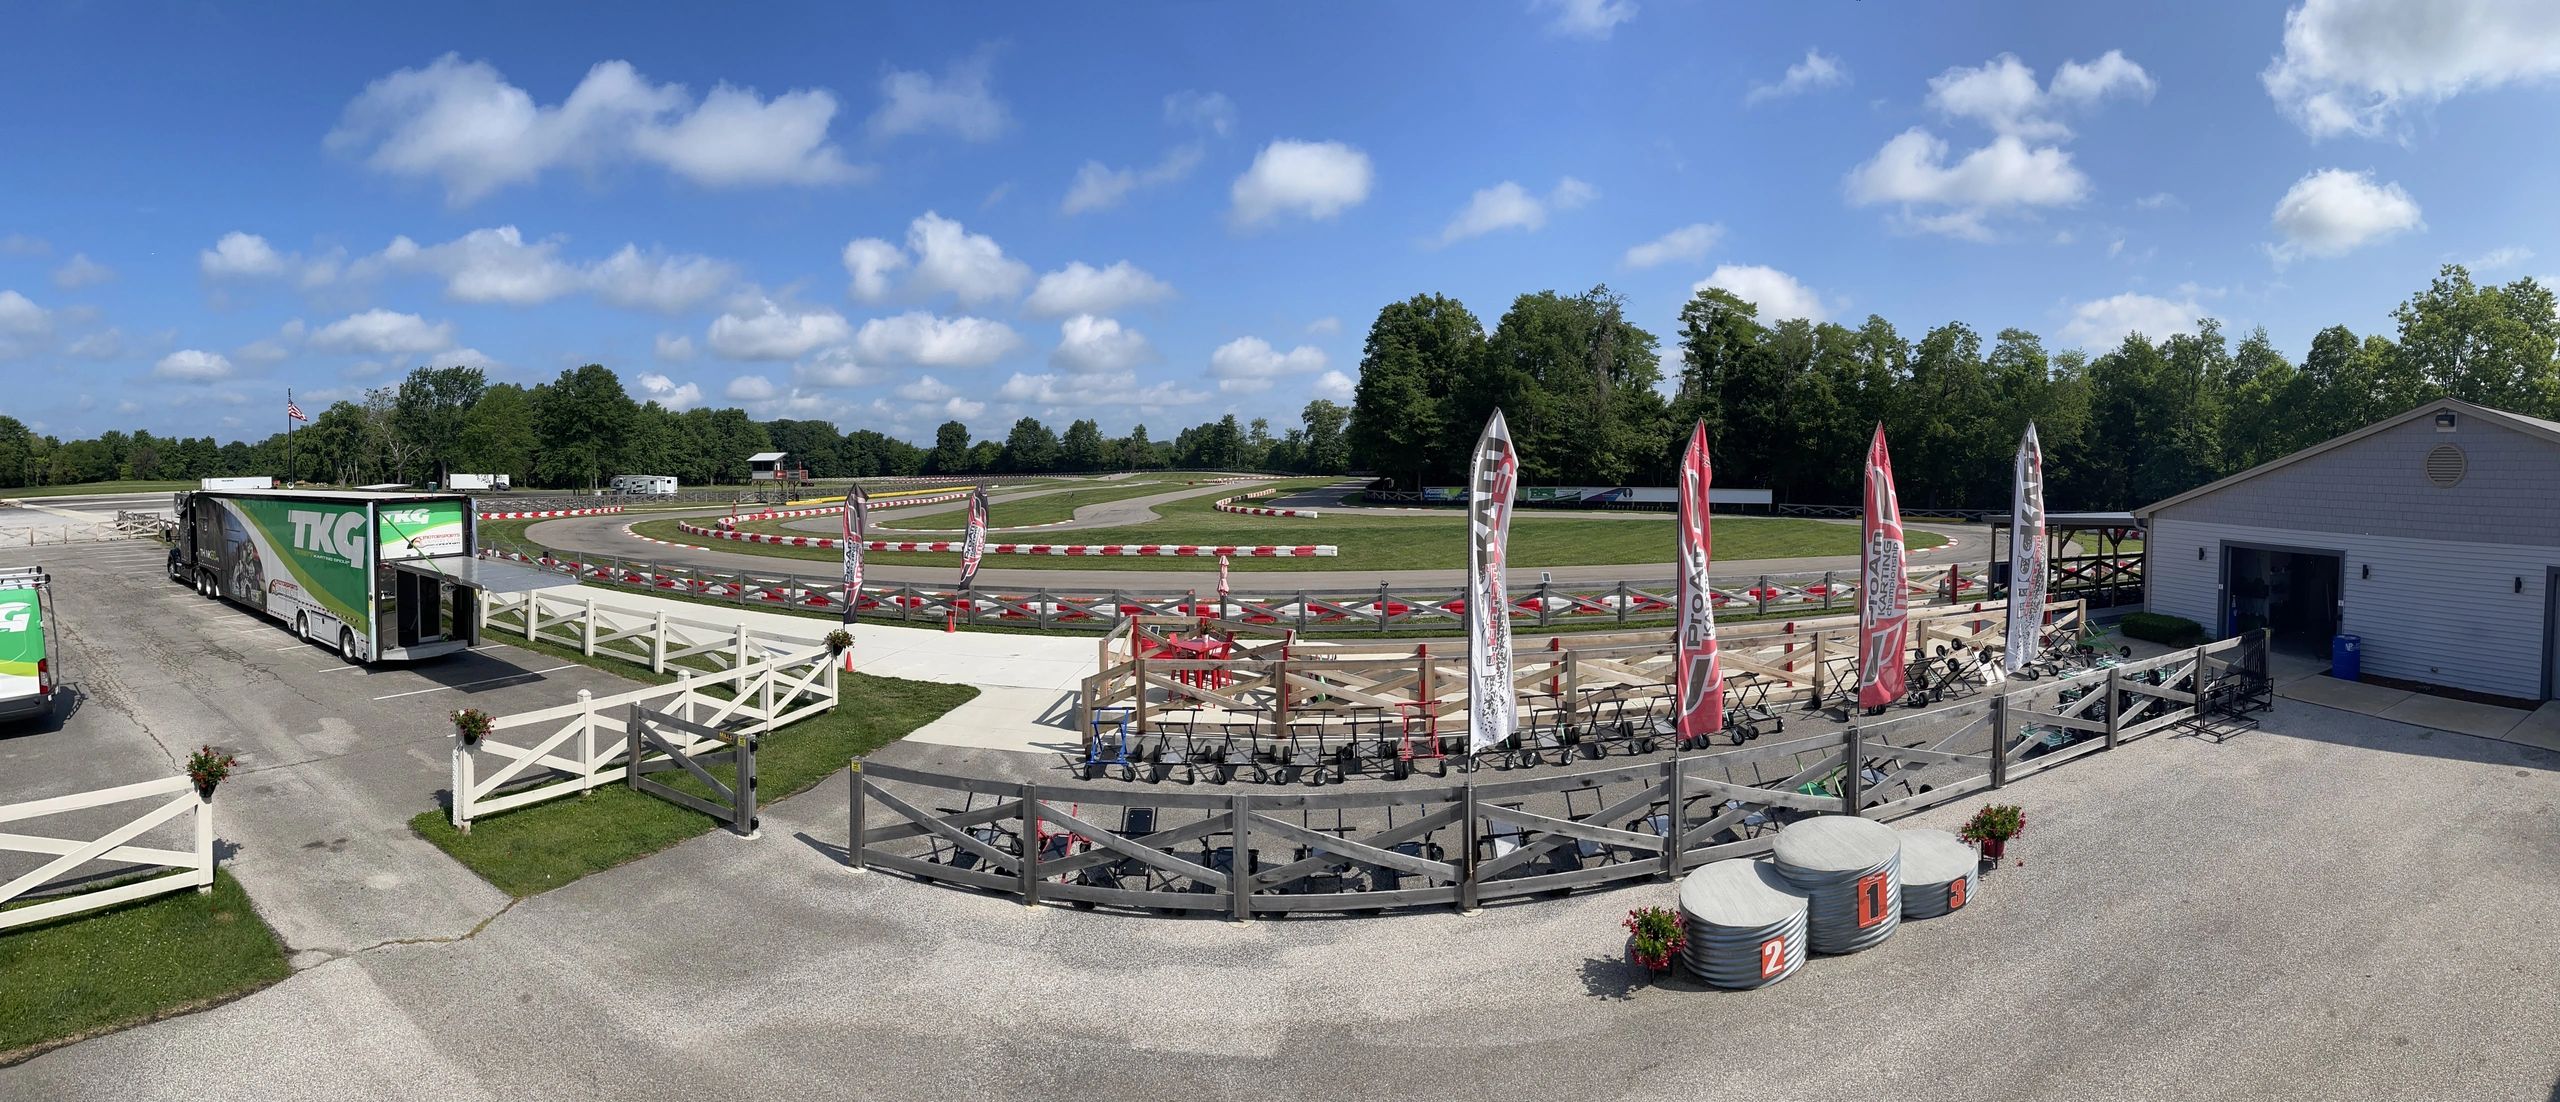 Go-kart racing venues in Greater Cincinnati area